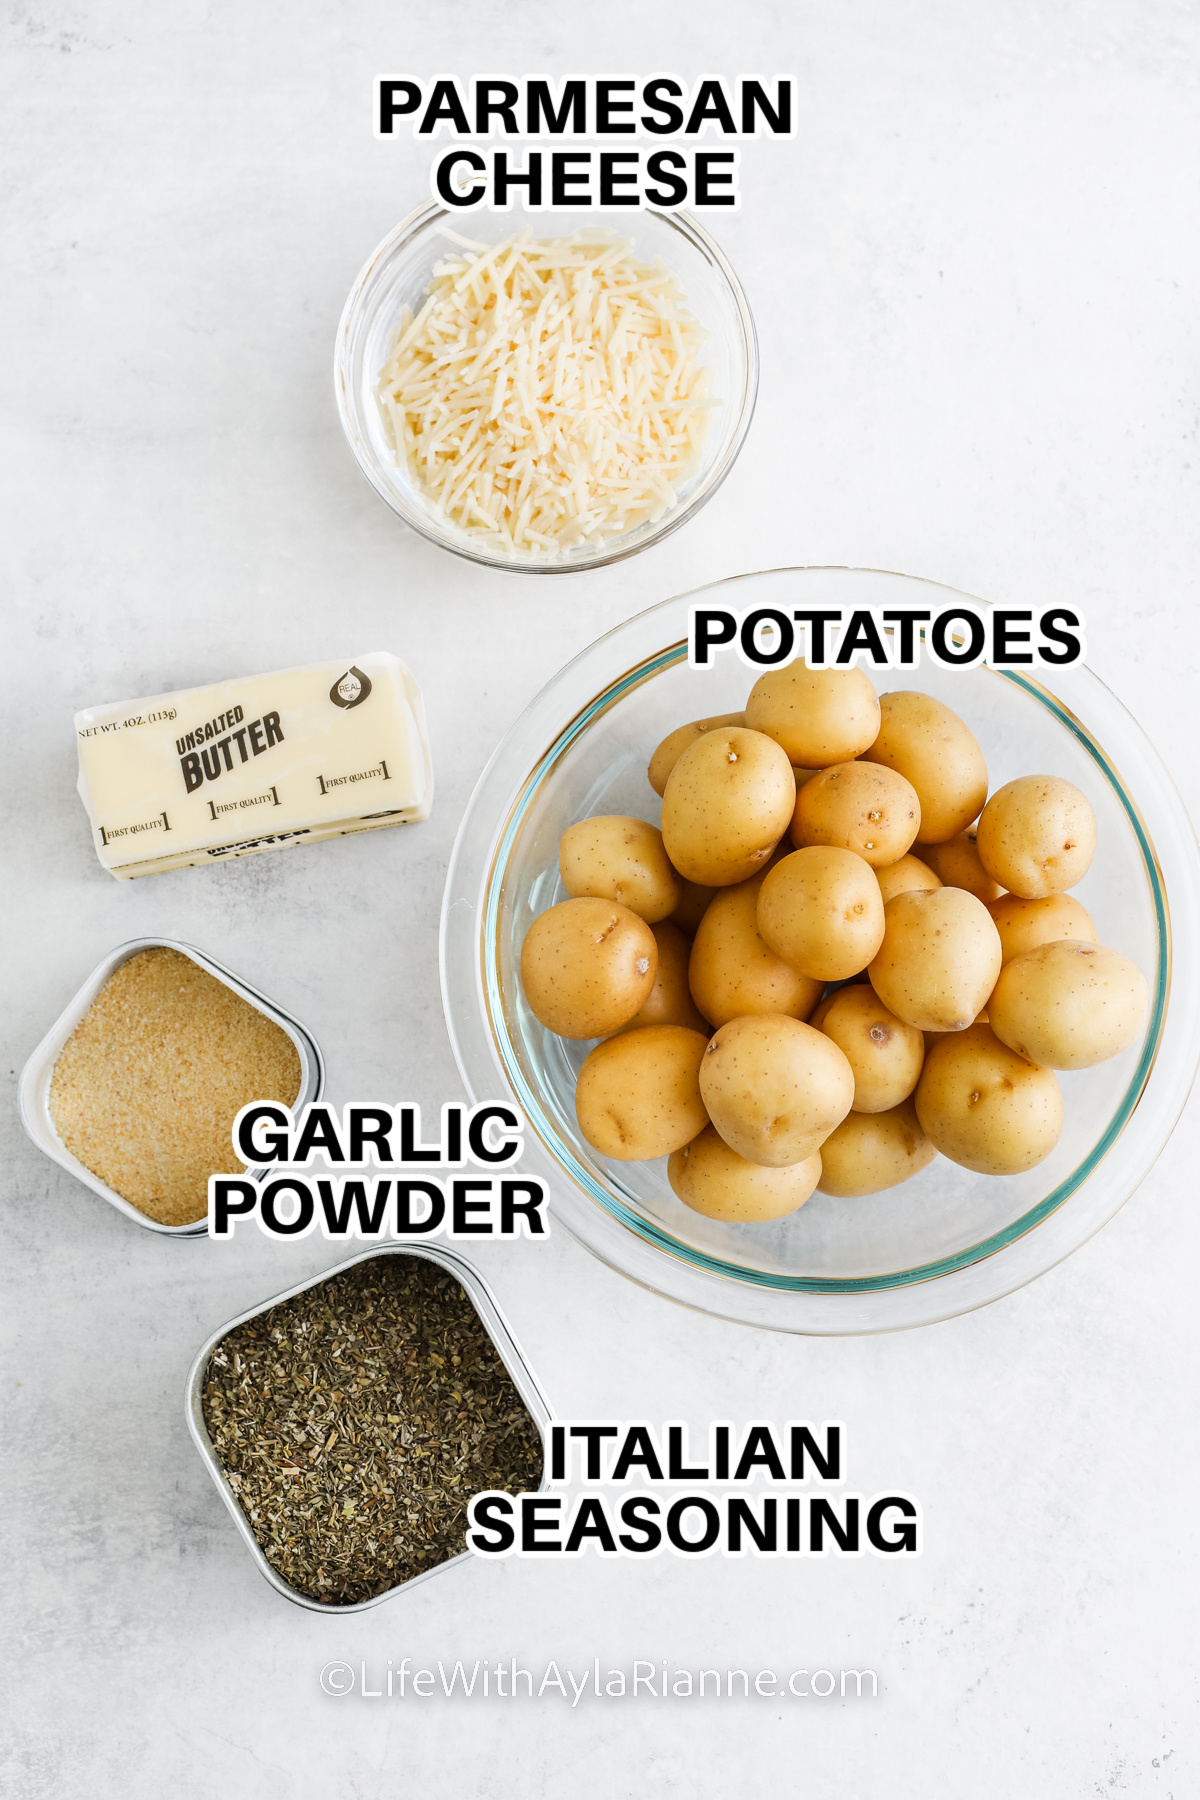 ingredients to make parmesan smashed potatoes including parmesan cheese, potatoes, butter, garlic powder, and Italian seasoning